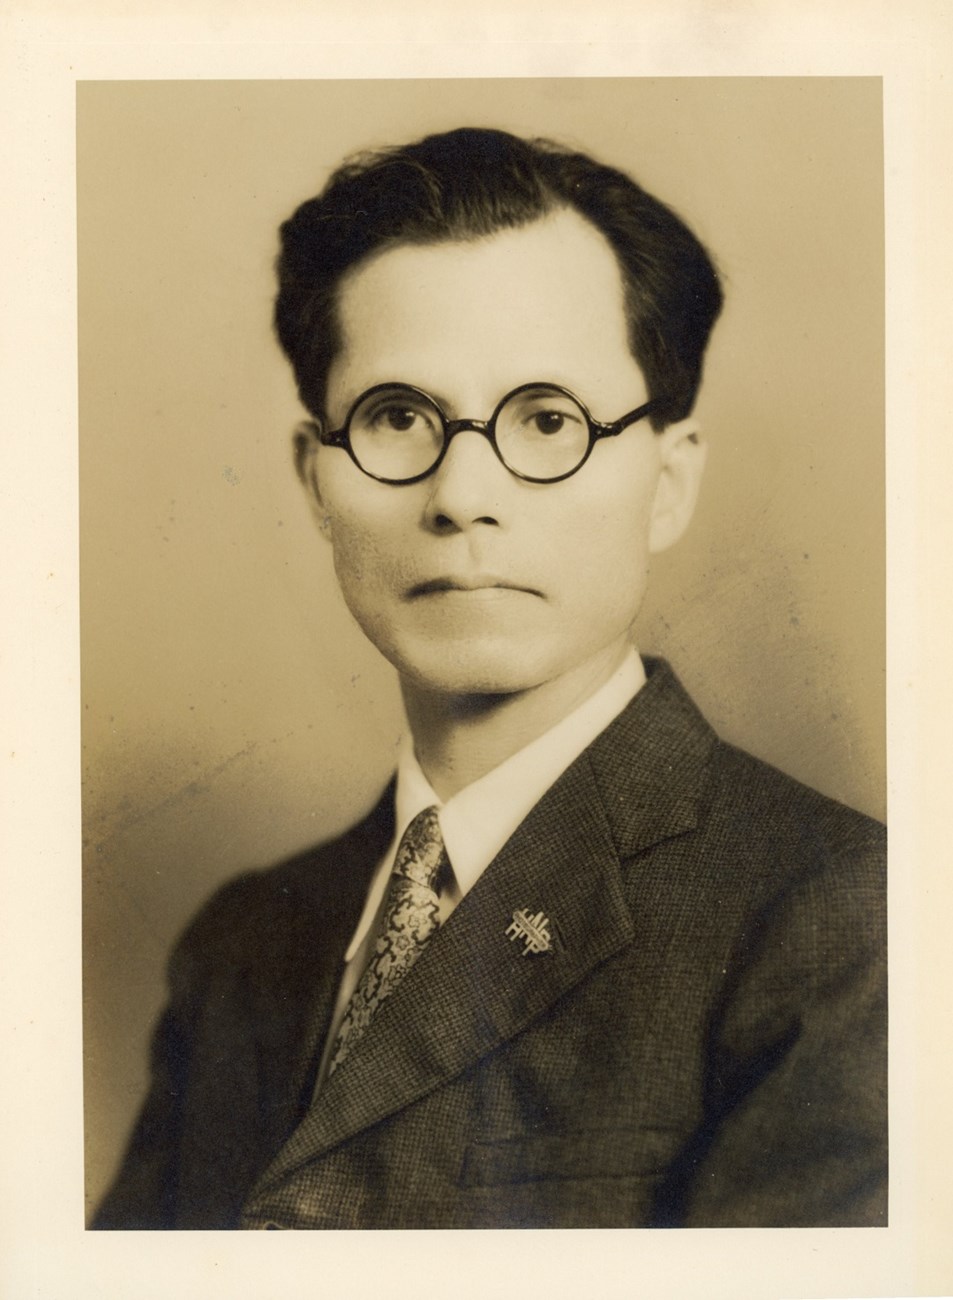 A black and white photograph of Kenichi Maehara